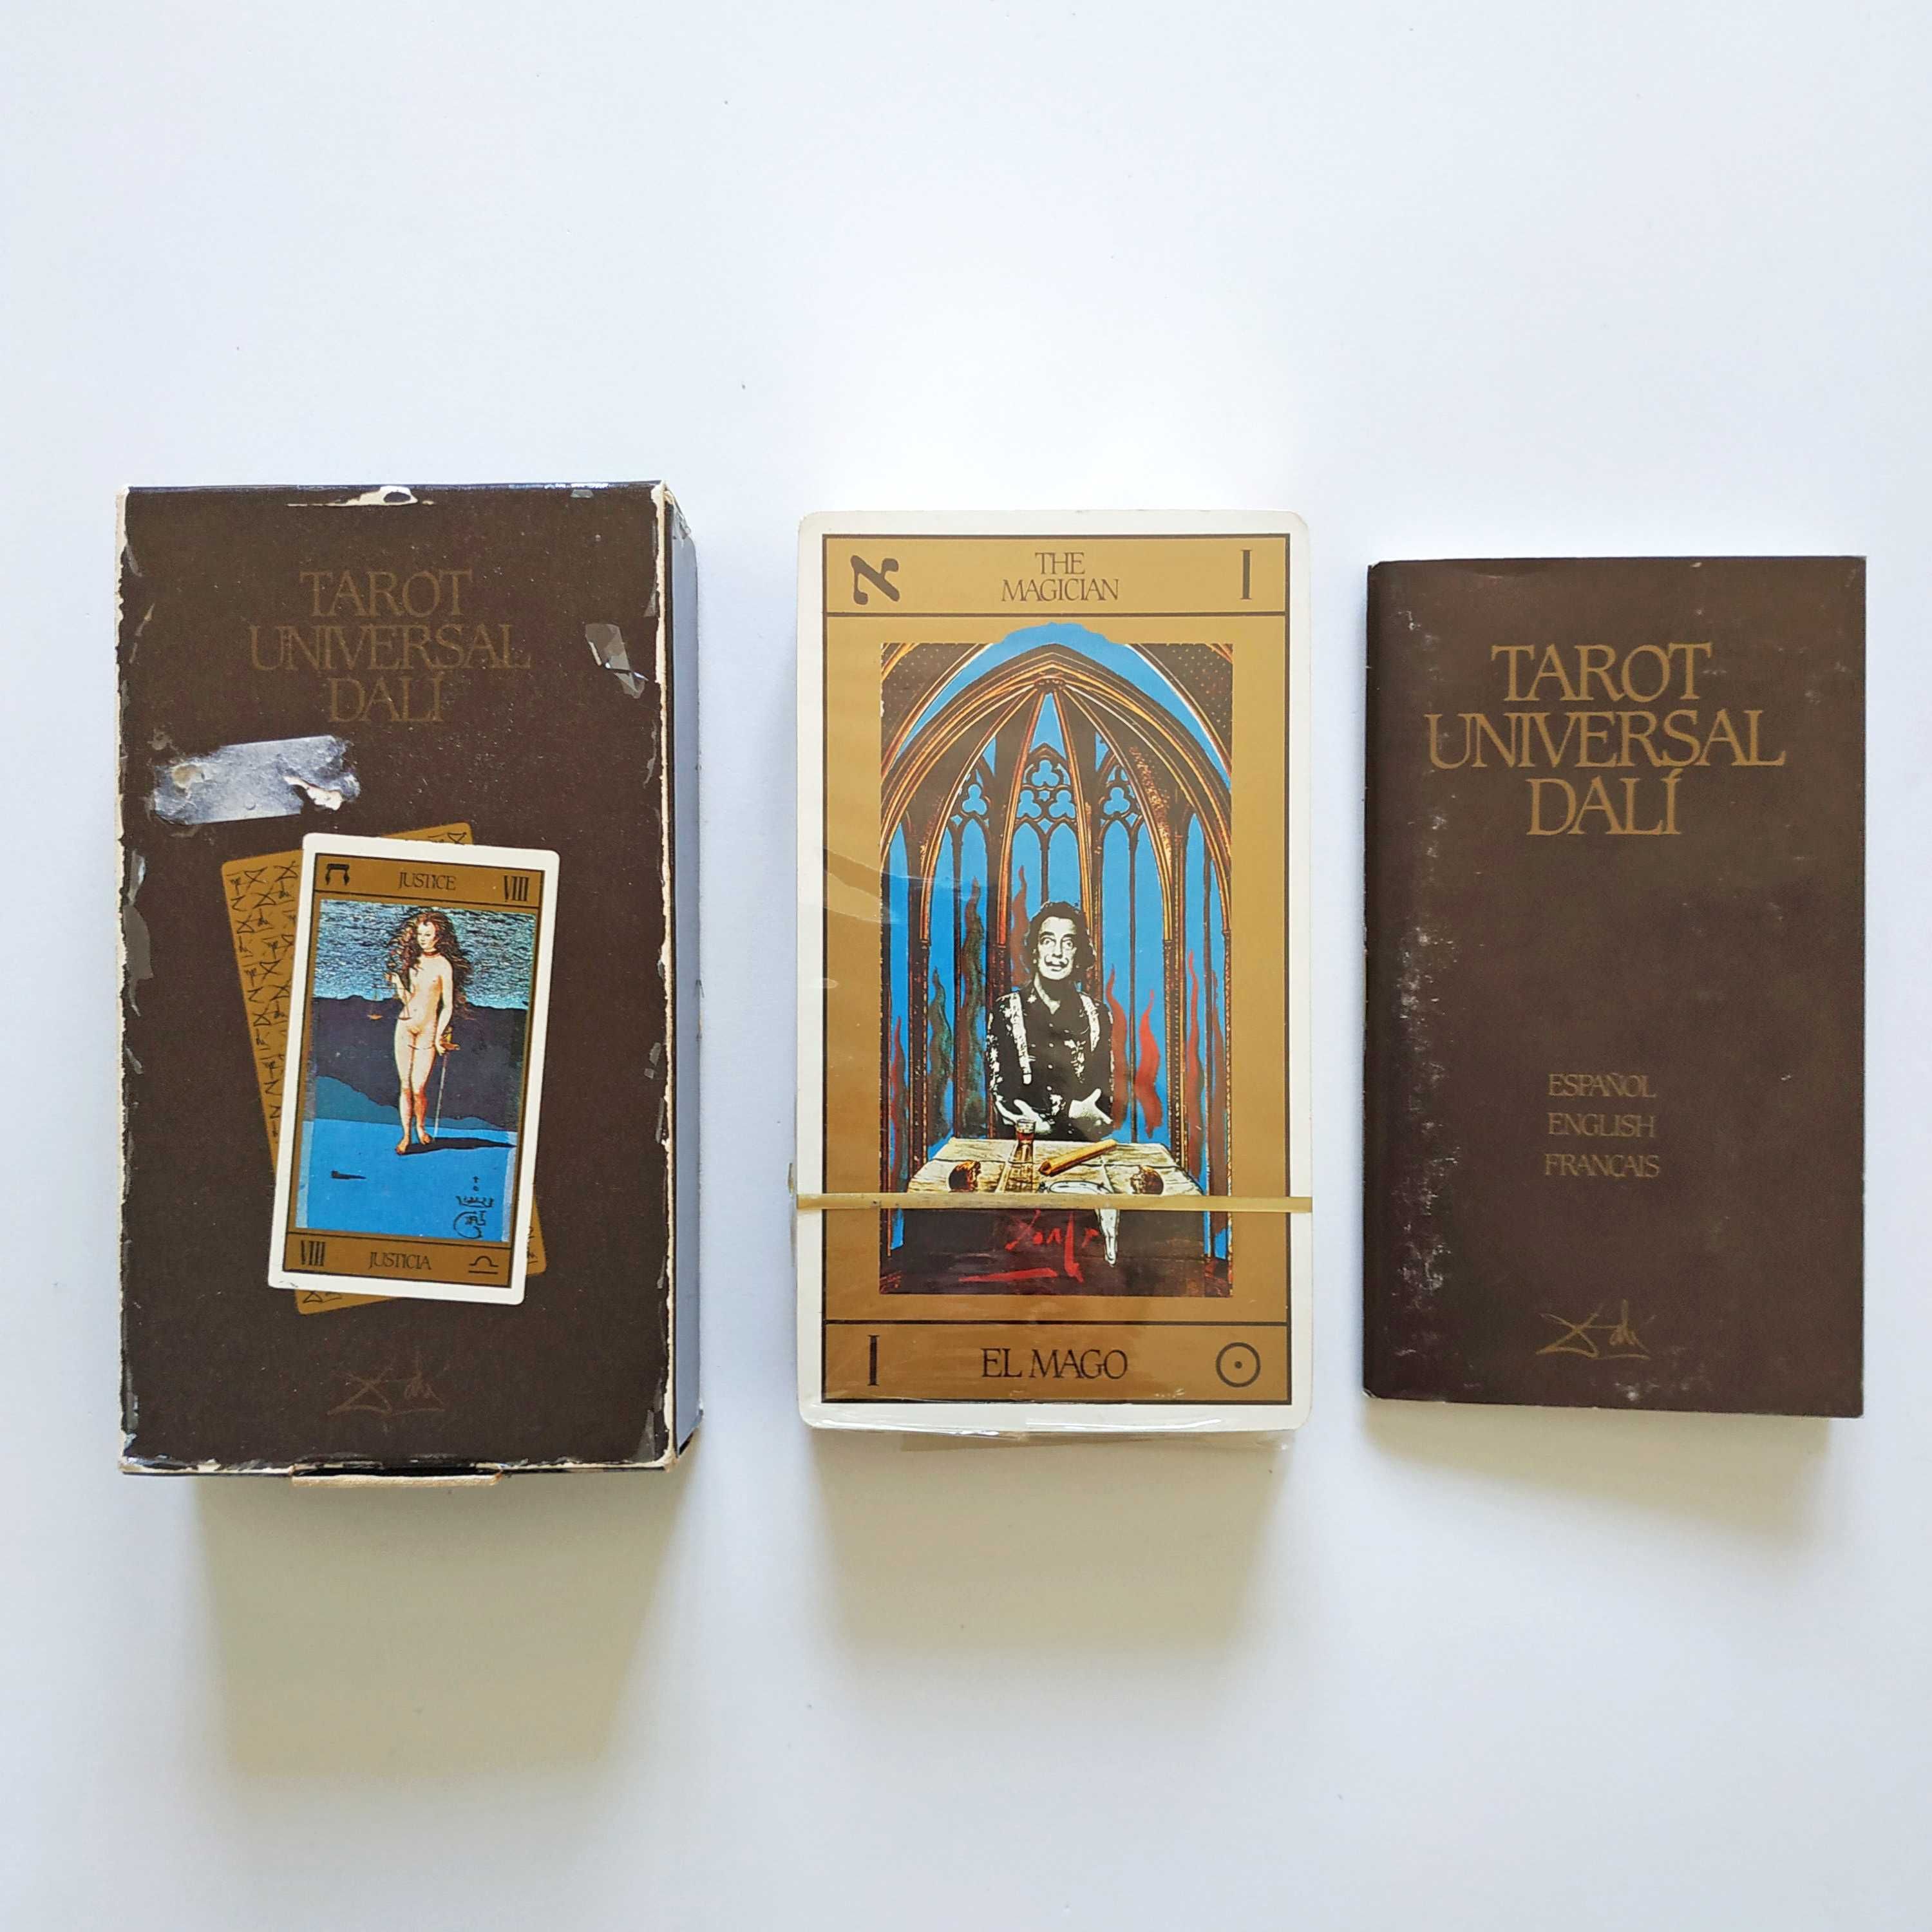 Tarot Universal Dali – baralho de cartas selado - vintage 1984